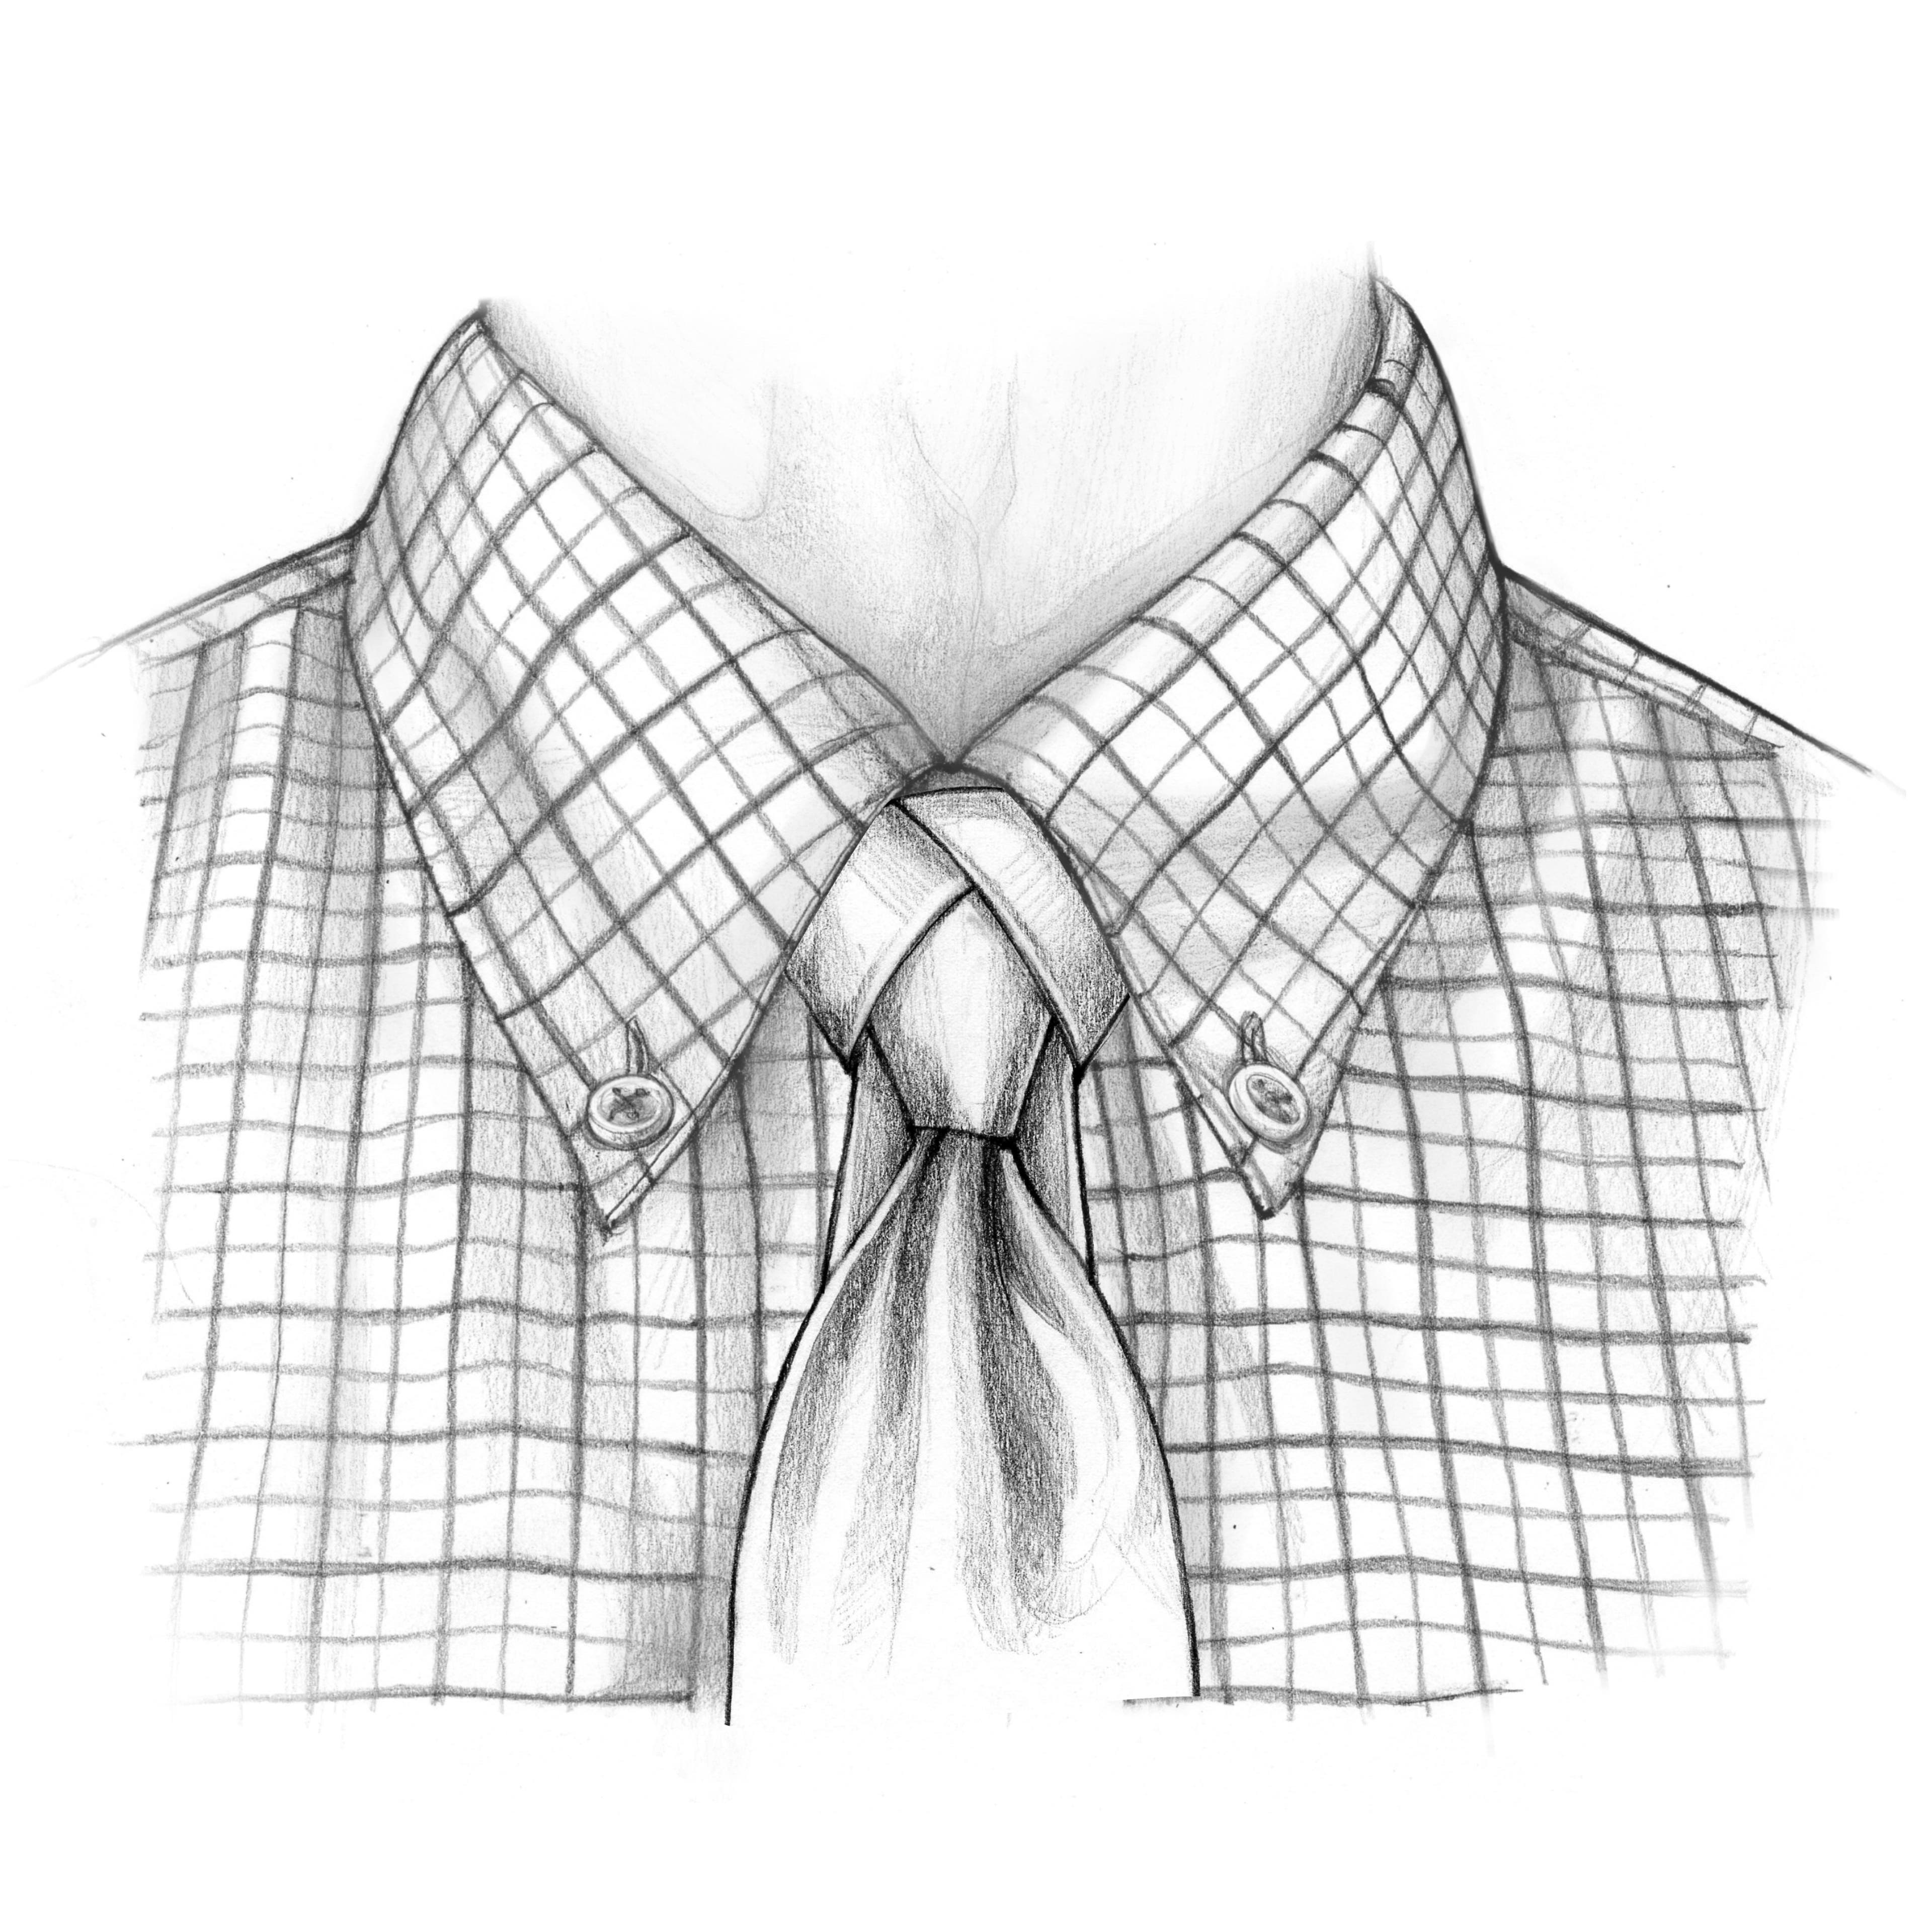 How To Tie A Necktie, Different Ways Of Tying A Tie